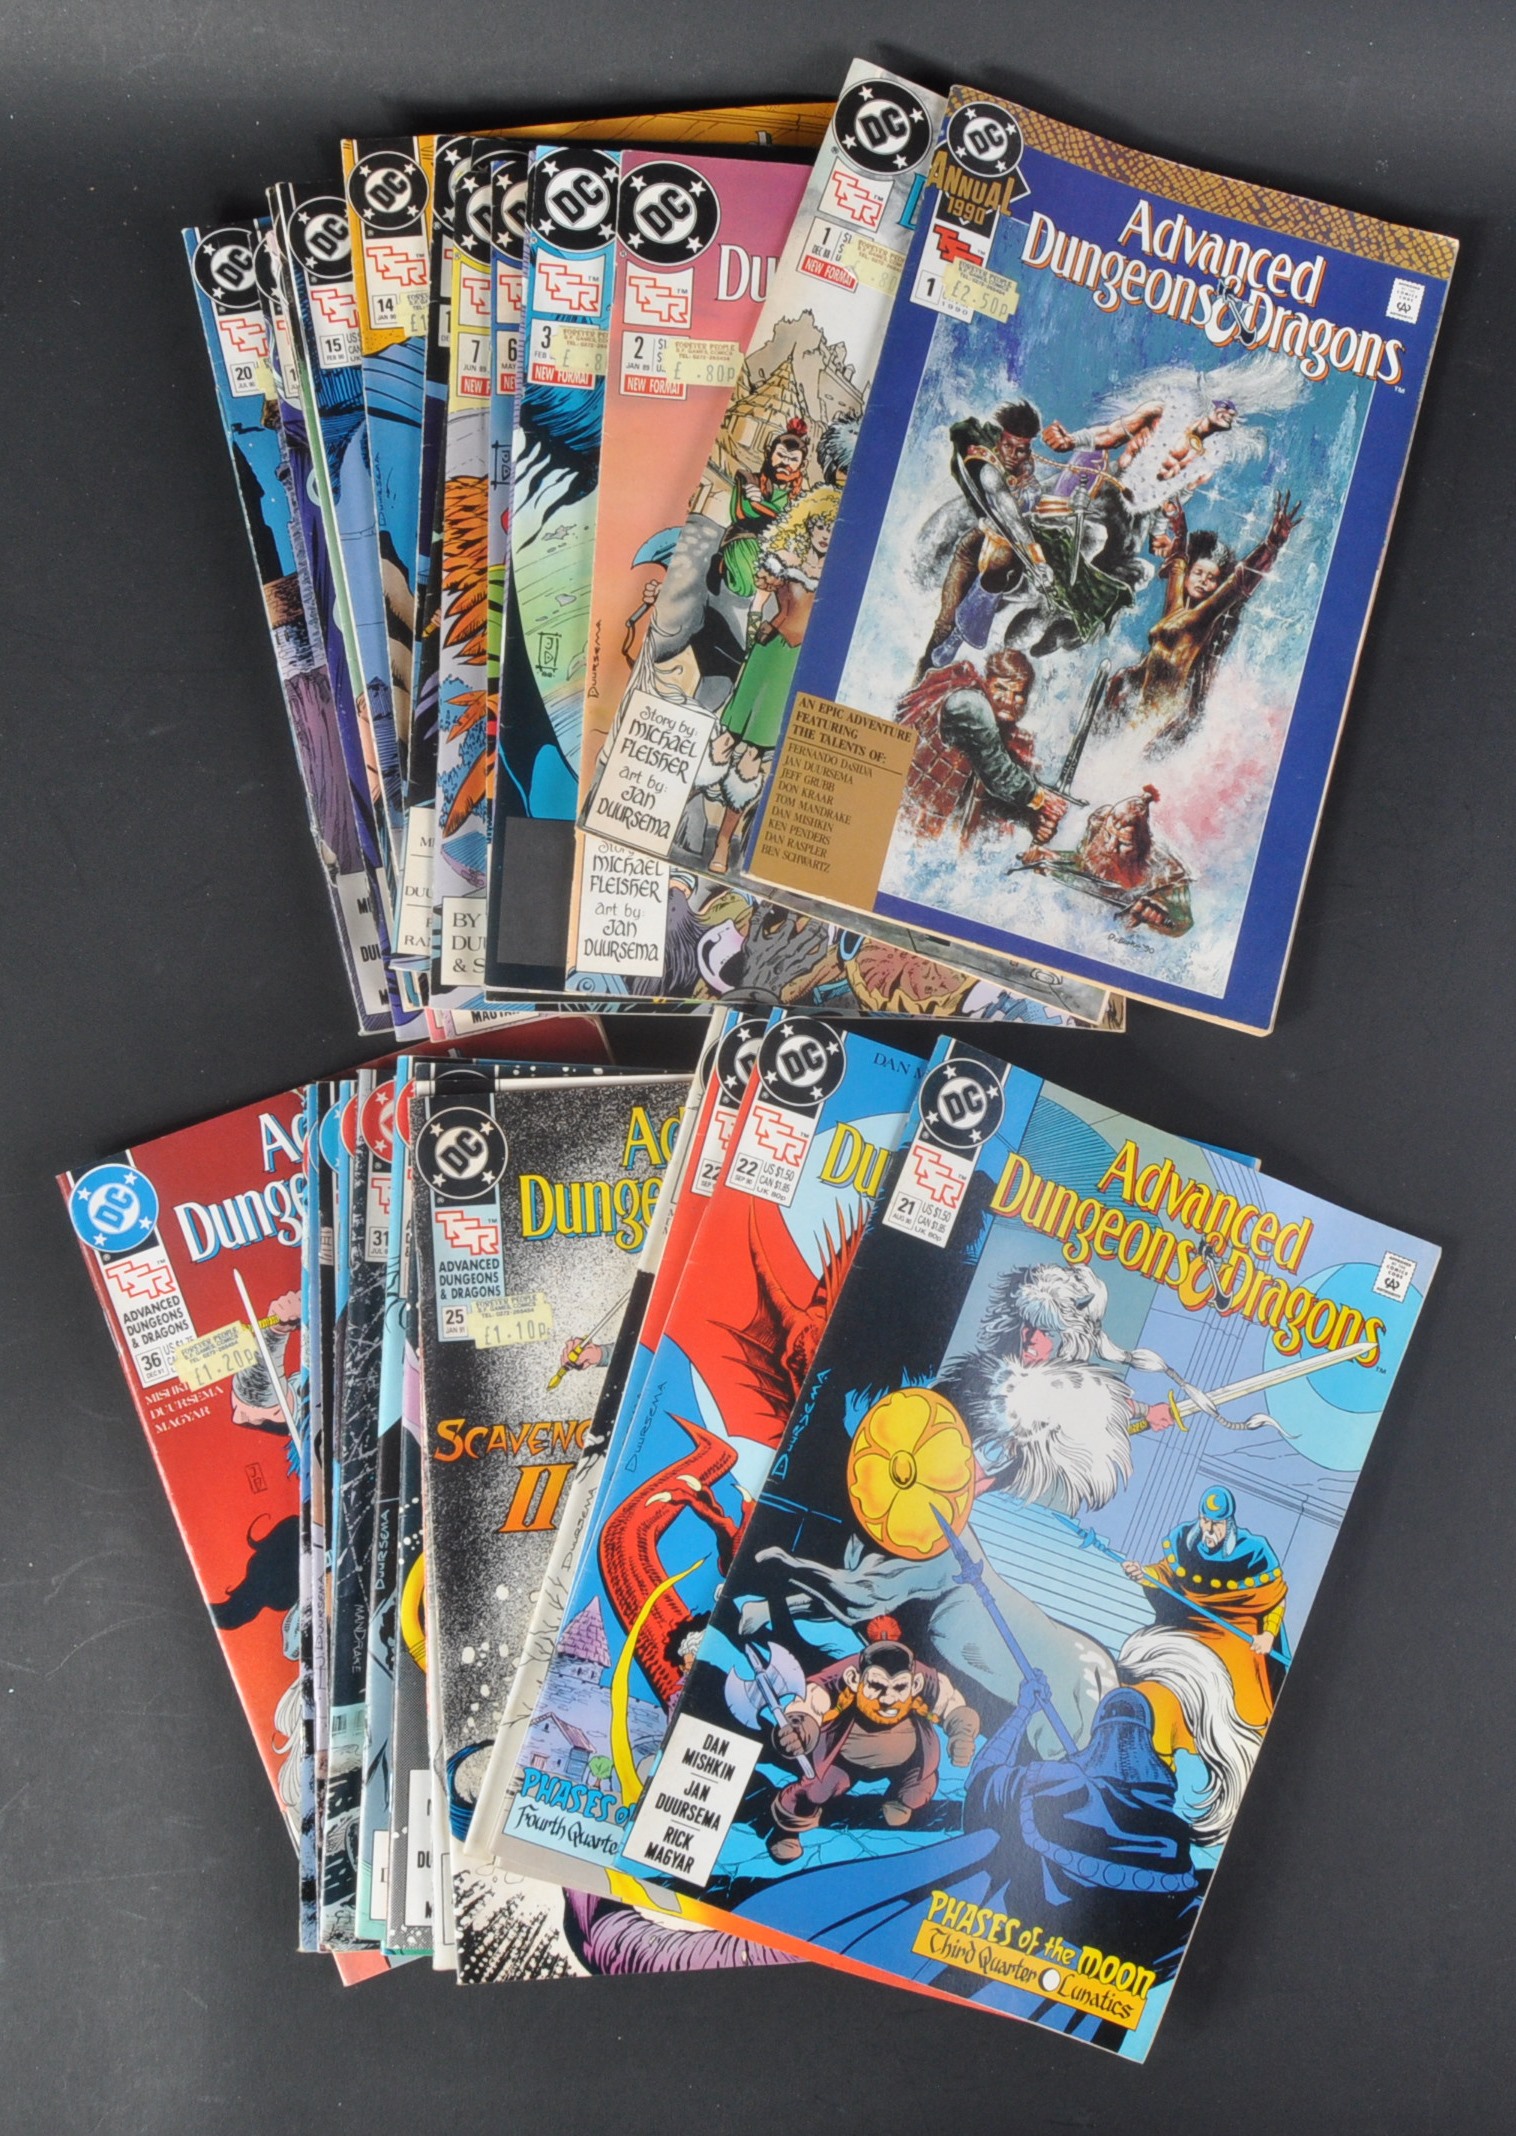 DC COMICS - ADVANCED DUNGEONS & DRAGONS - VINTAGE COMIC BOOKS